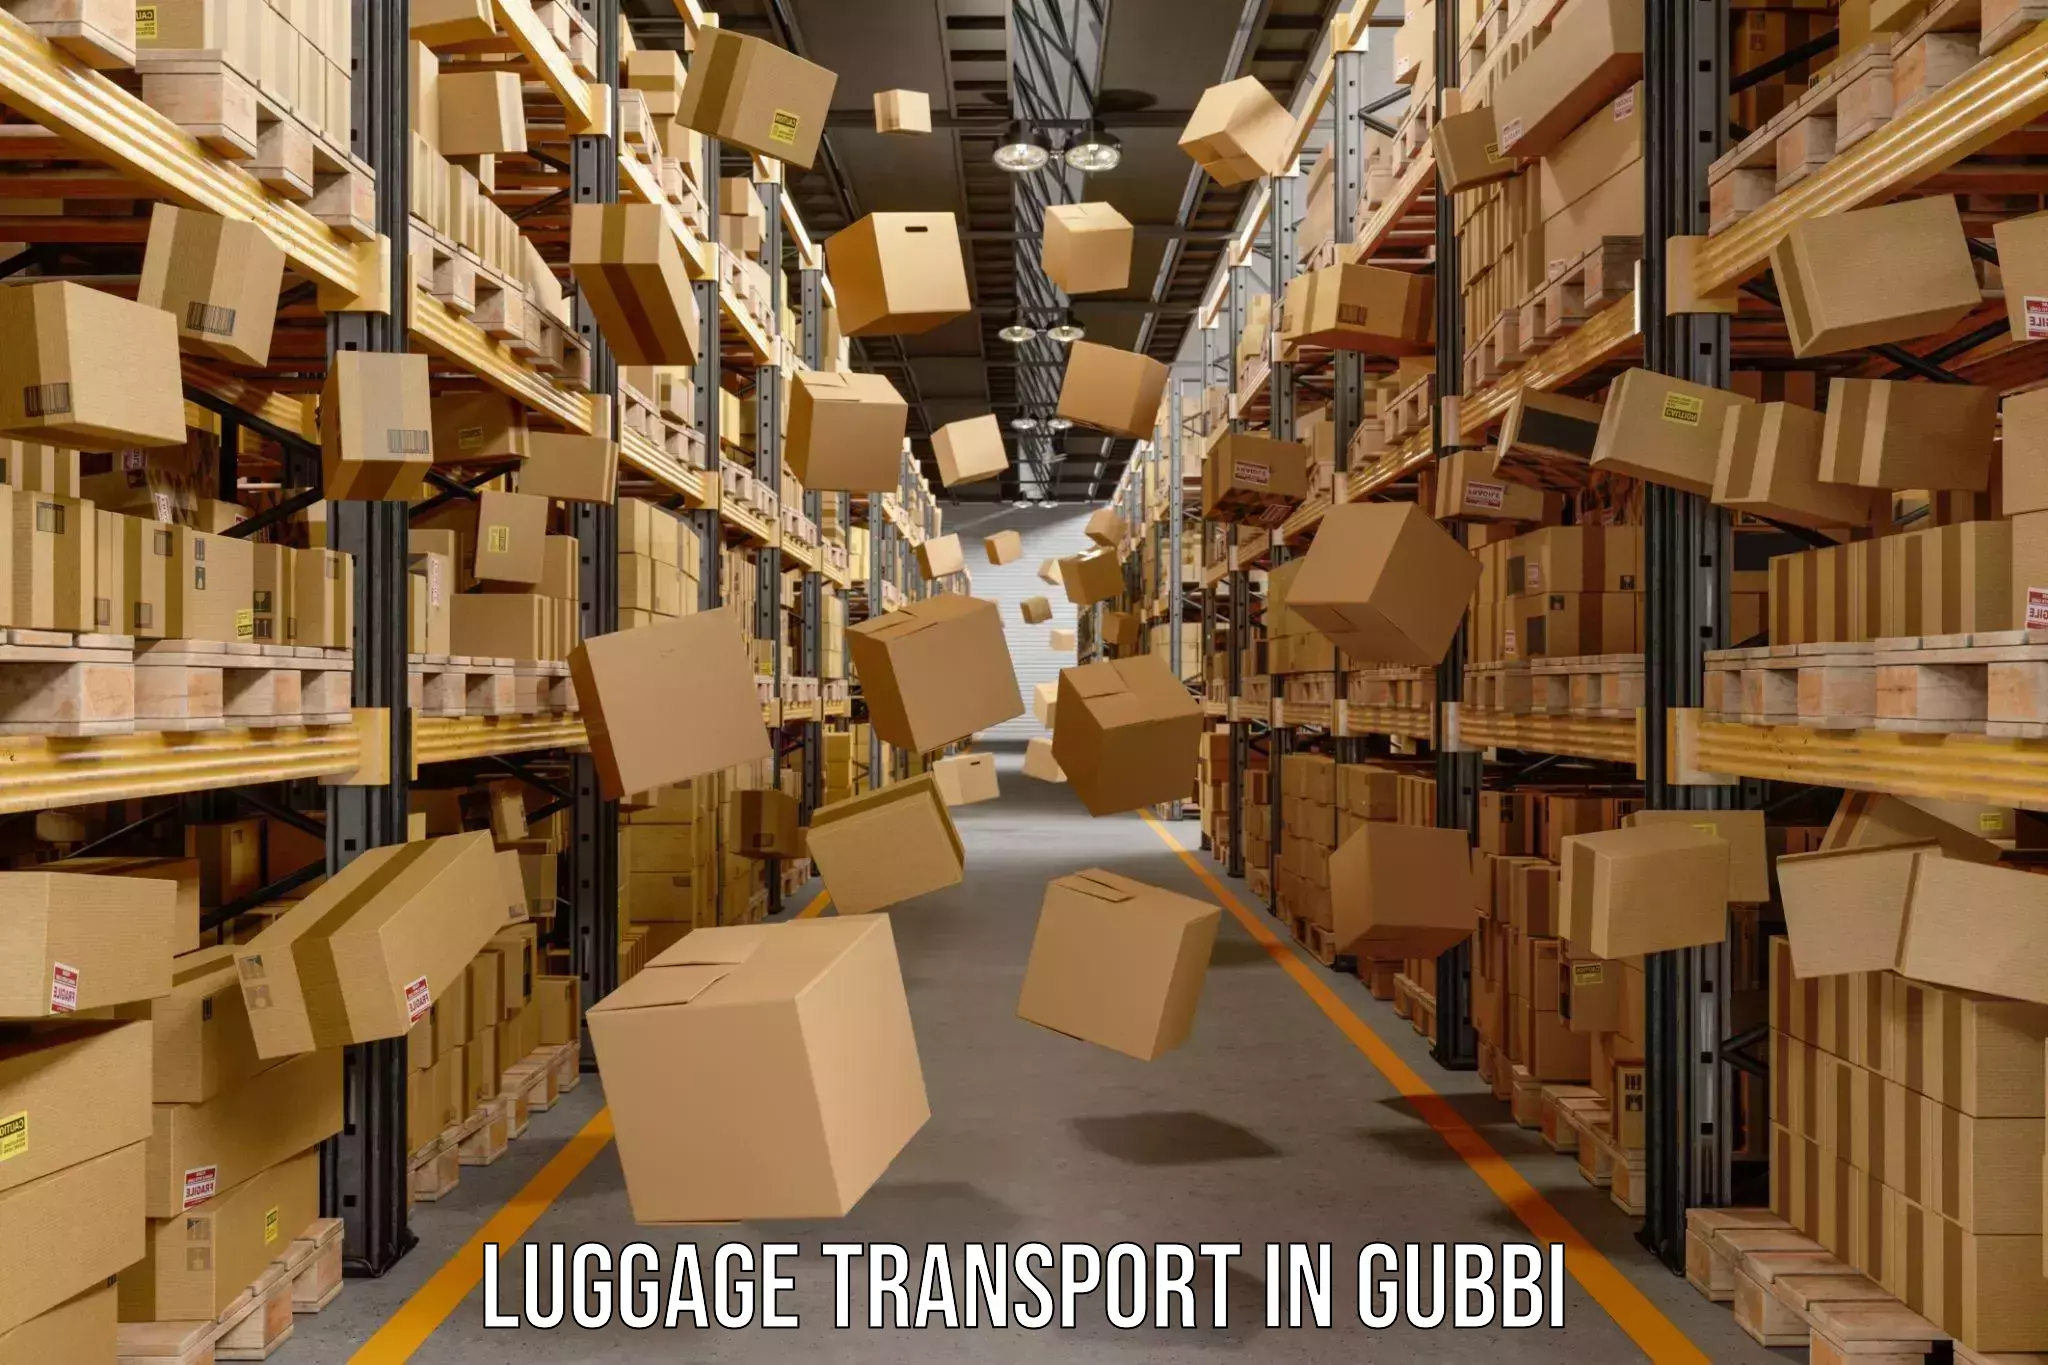 Professional baggage transport in Gubbi